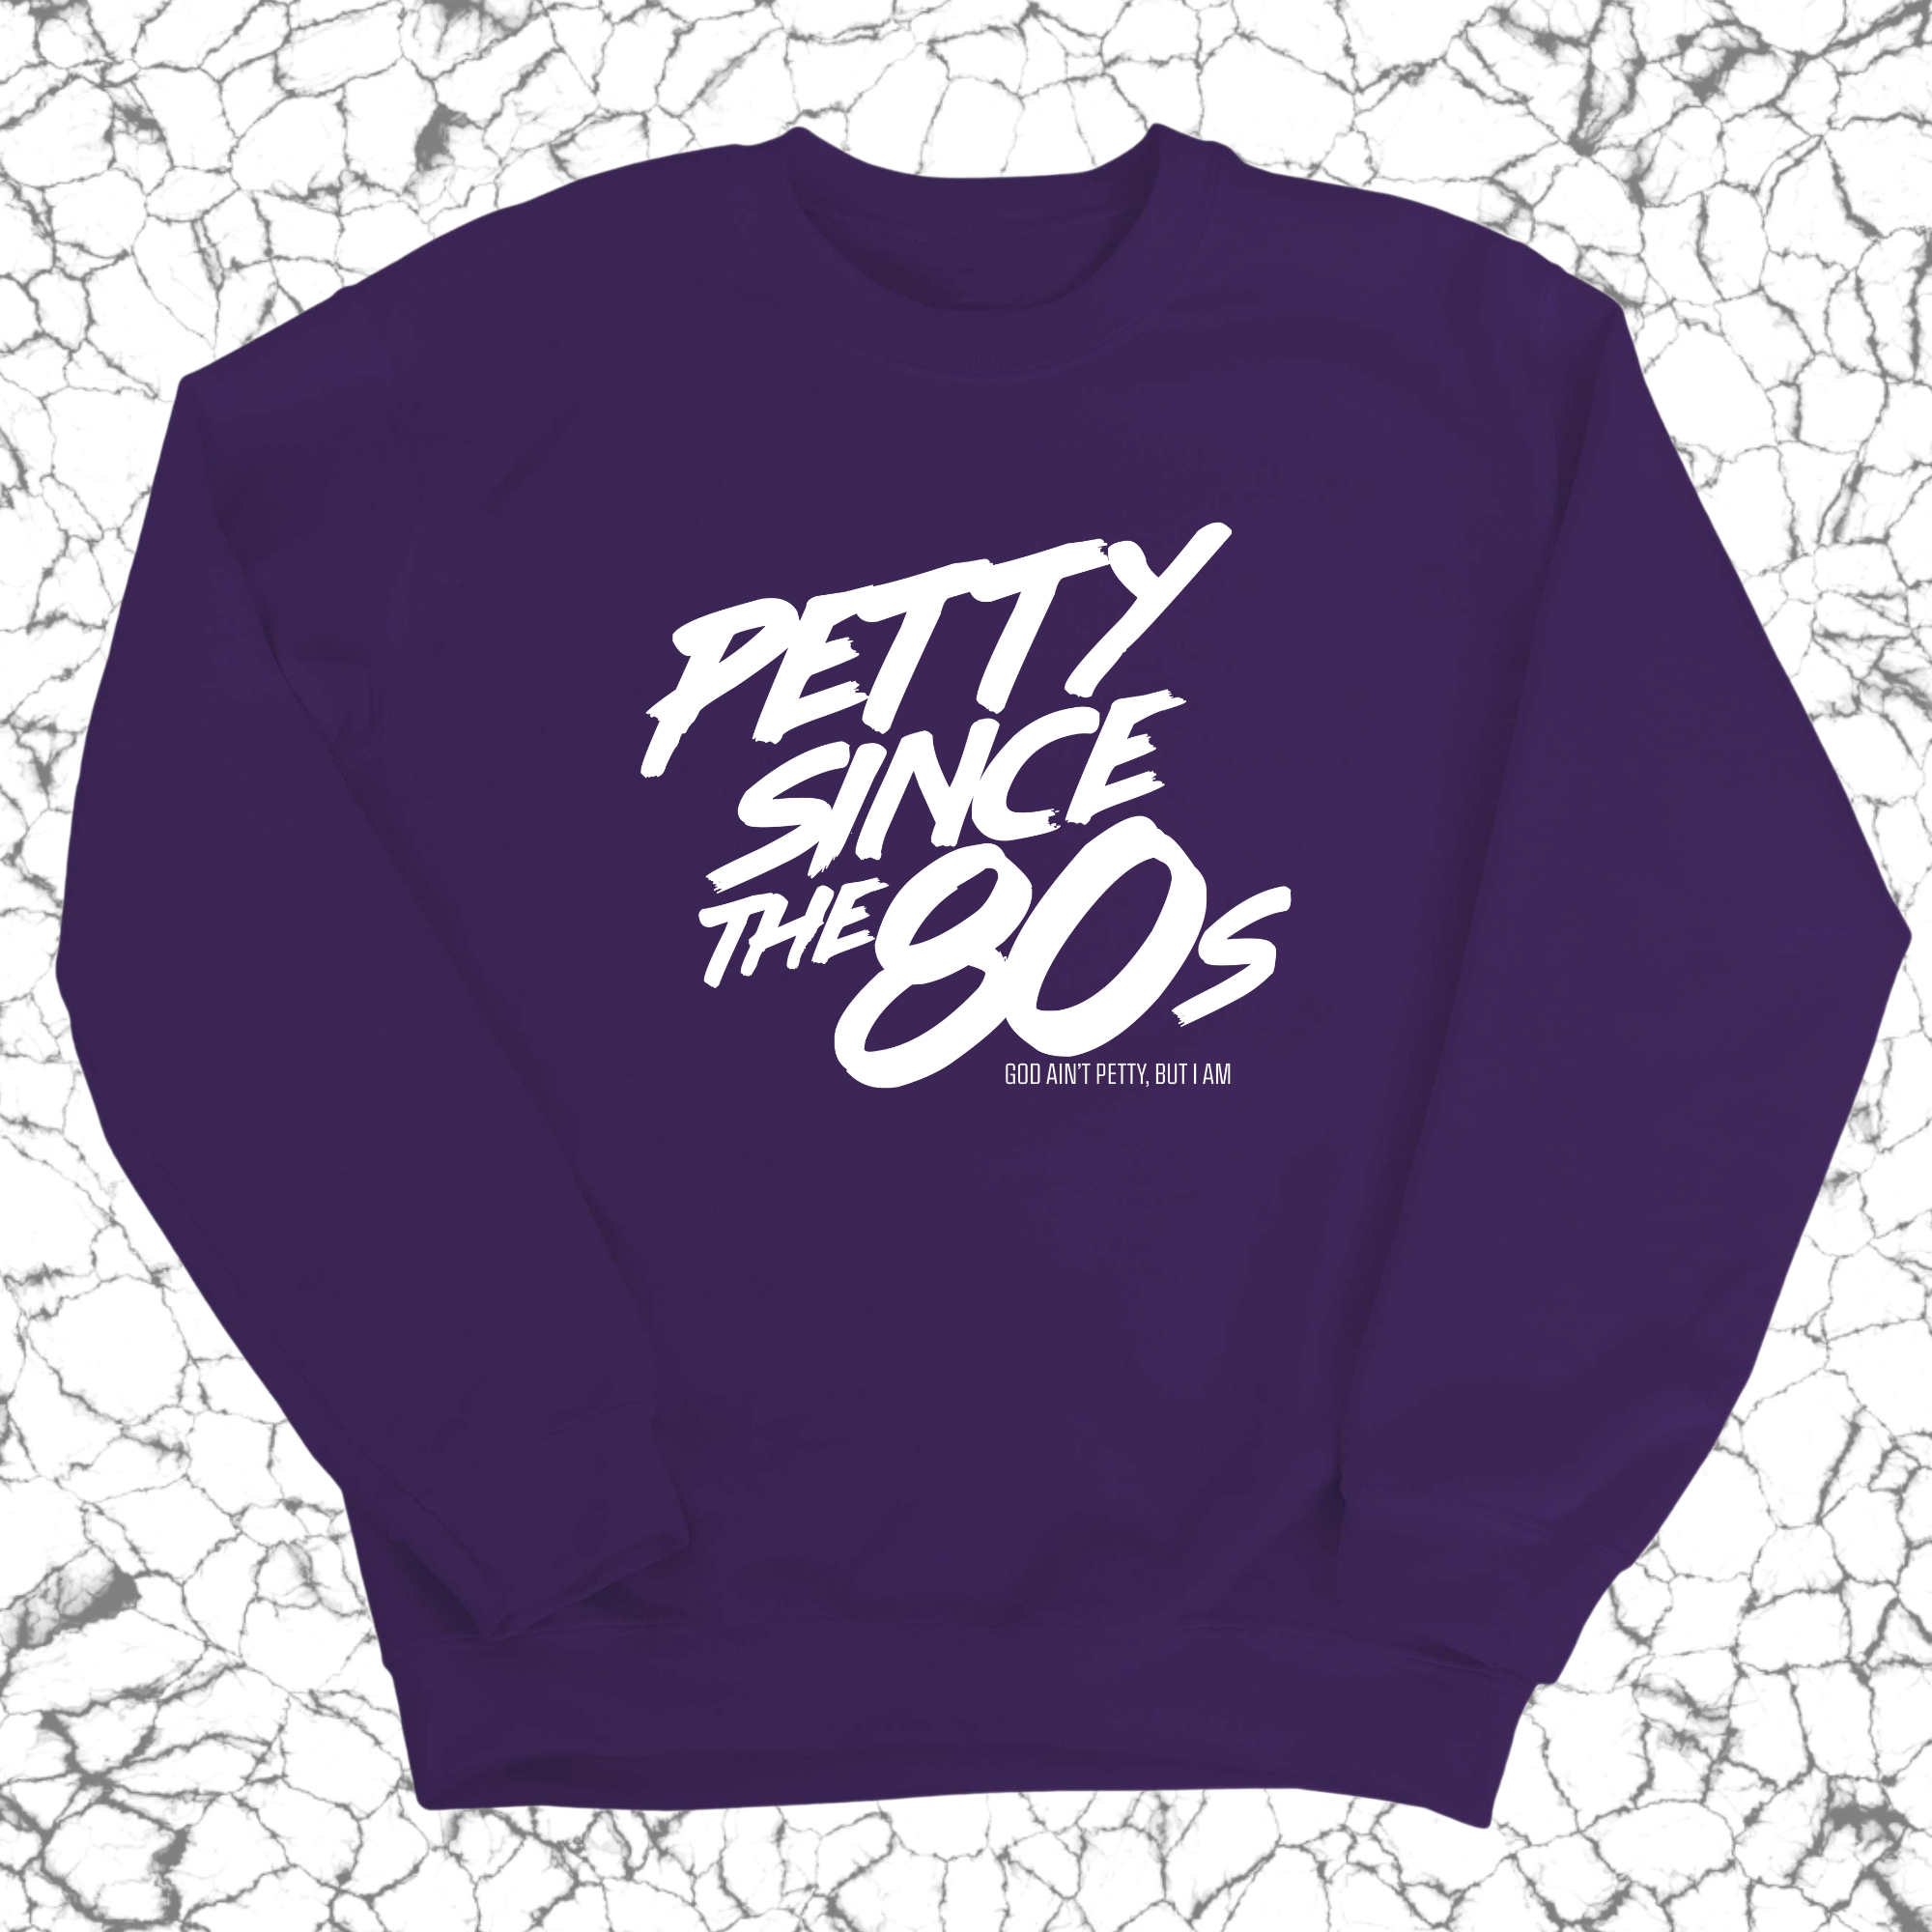 Petty Since the 80s Unisex Sweatshirt-Sweatshirt-The Original God Ain't Petty But I Am